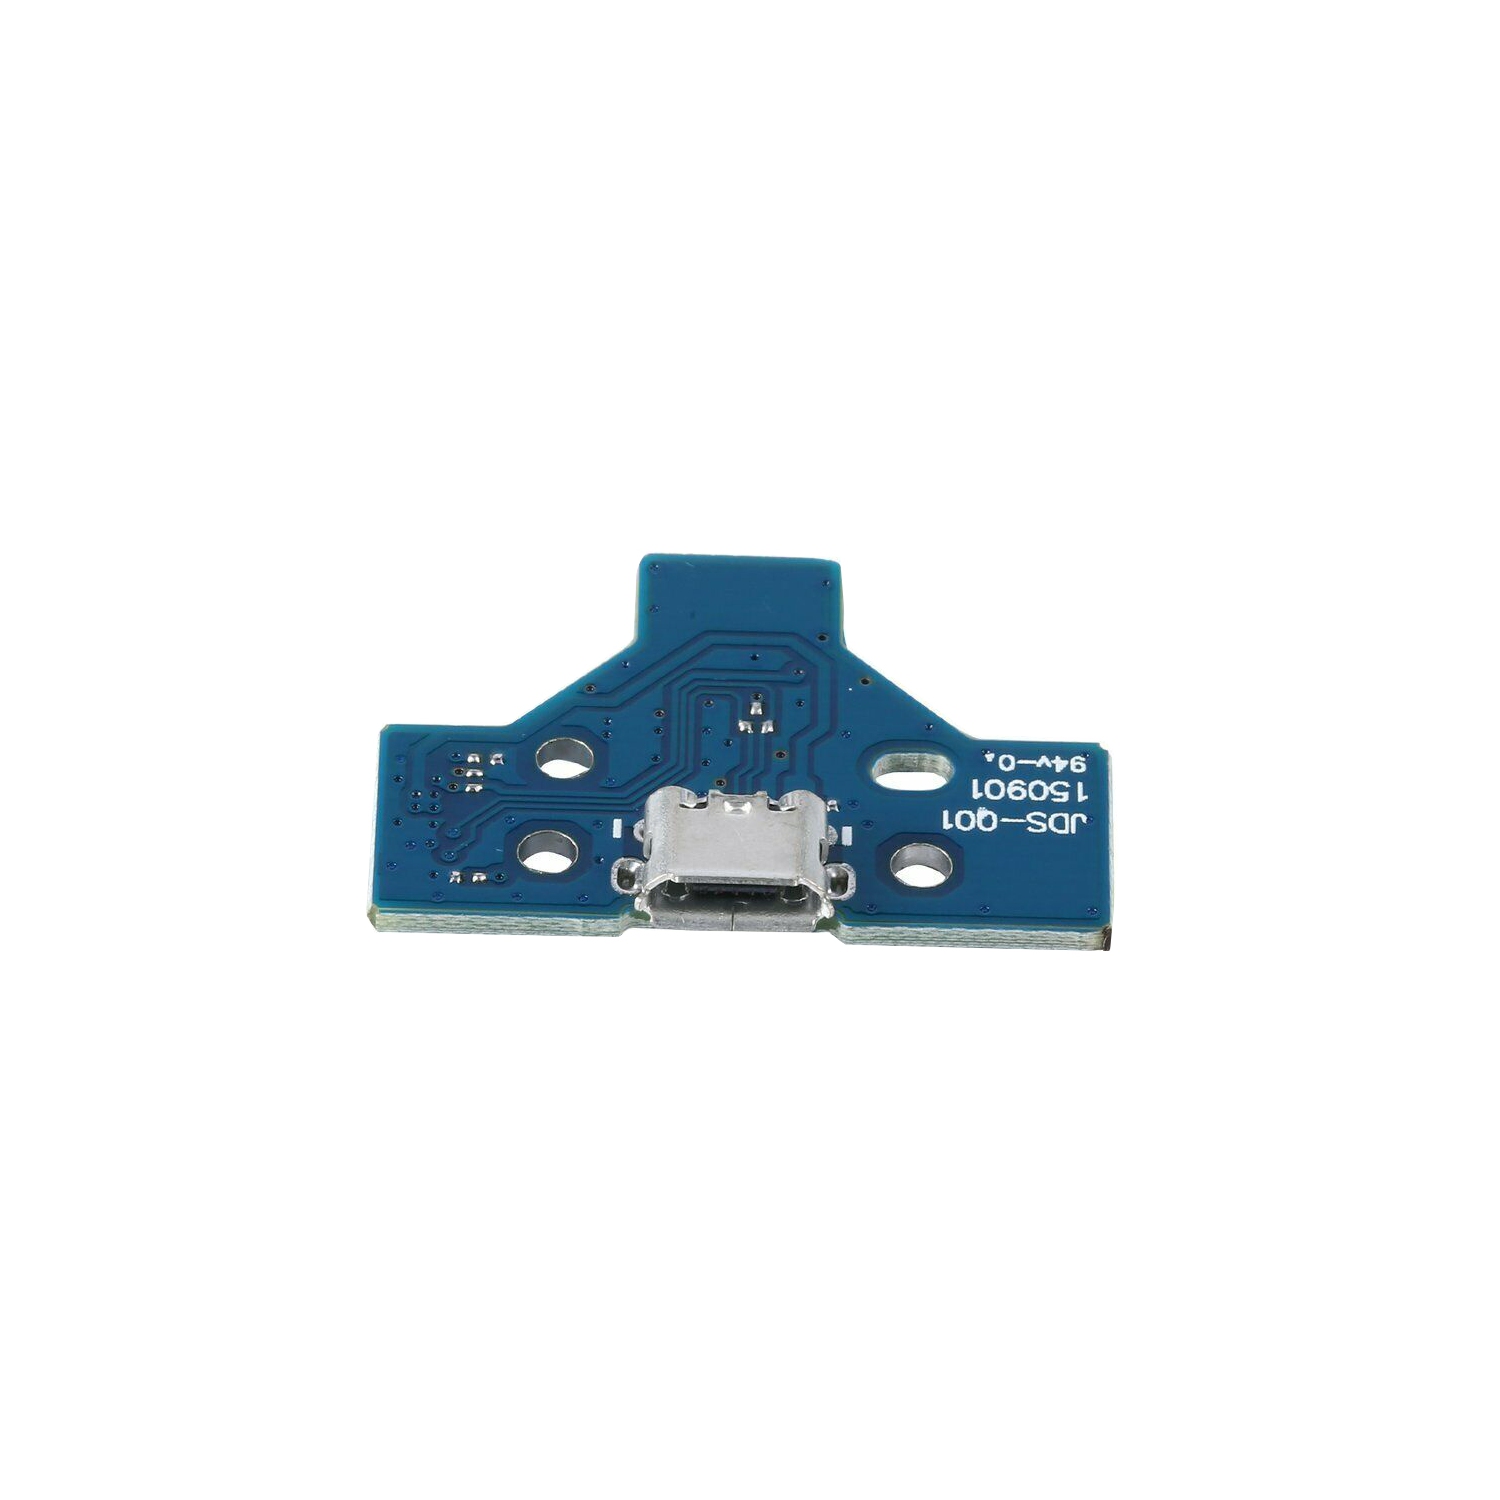 USB Charging Port Board JDS-001 For Sony PS4 Dualshock Controller